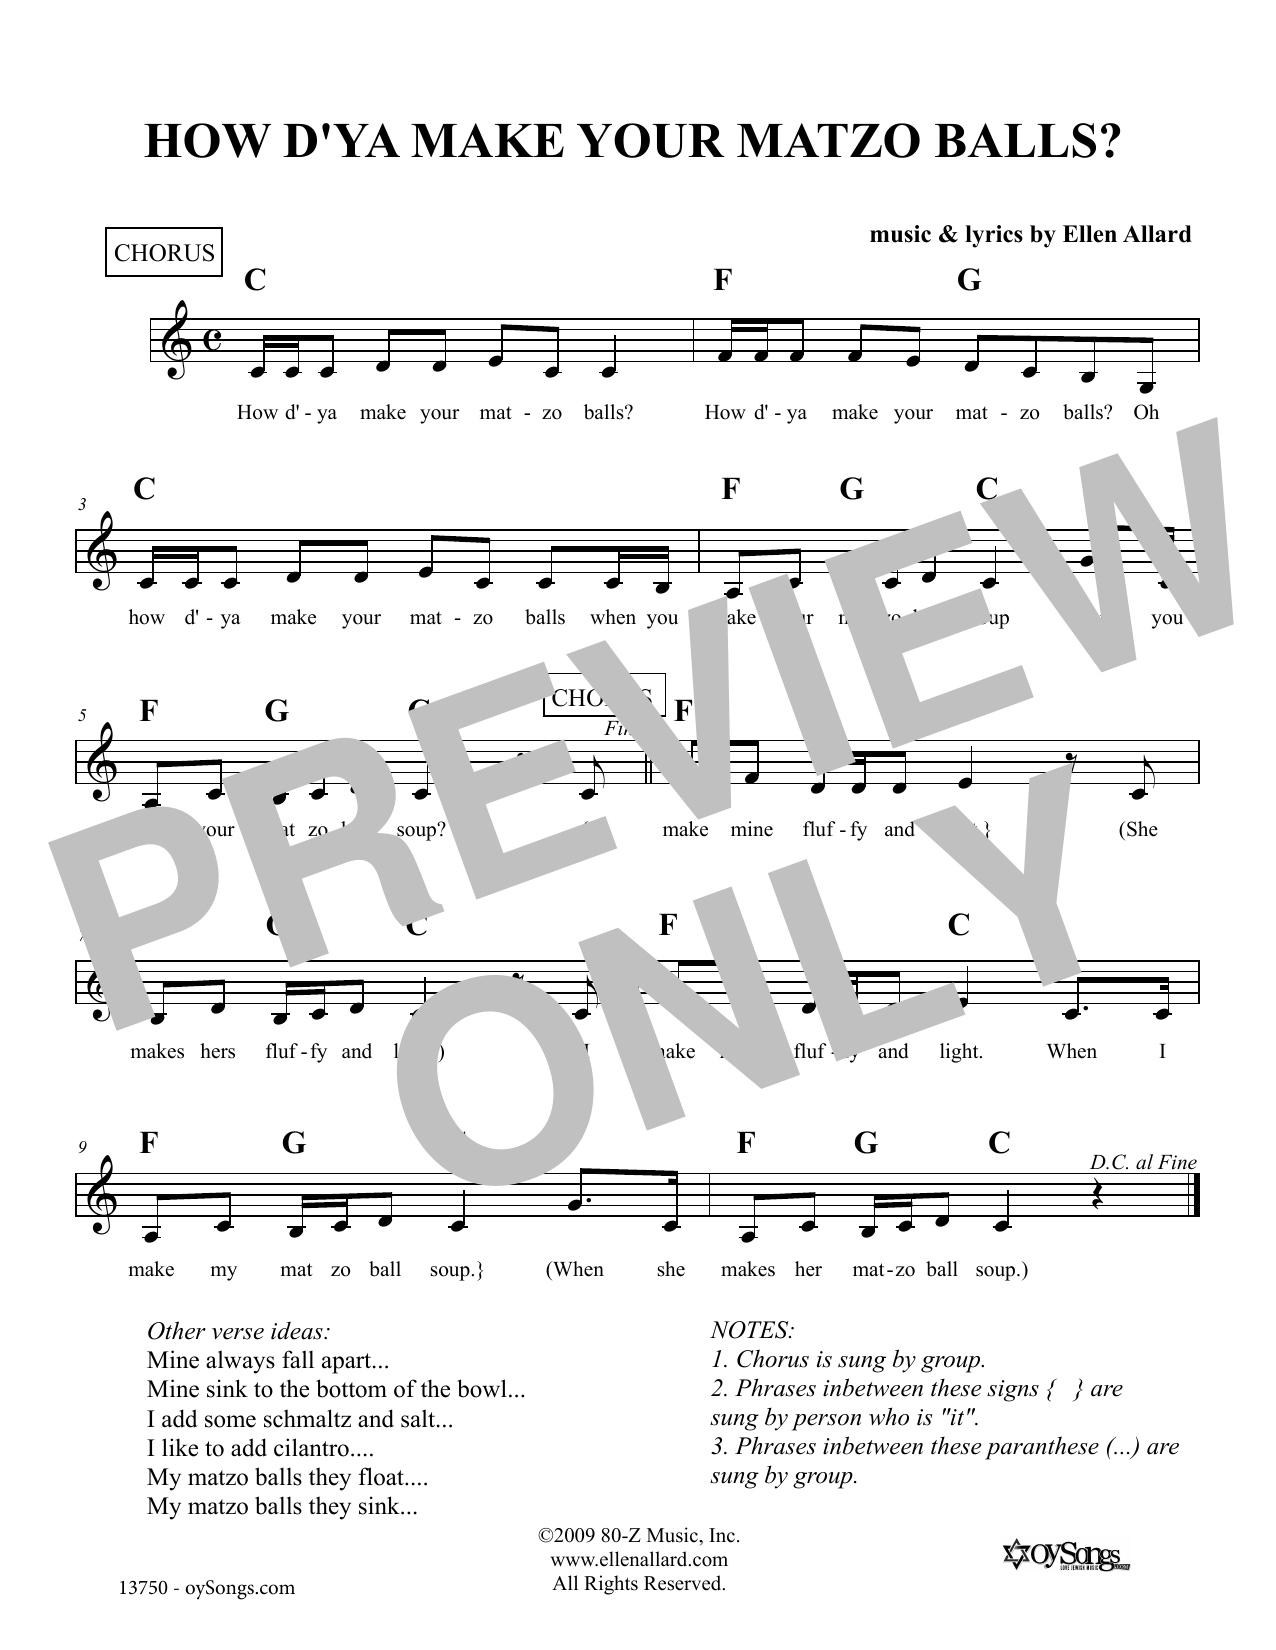 Ellen Allard How Do You Make Your Matzo Balls sheet music notes and chords arranged for Lead Sheet / Fake Book